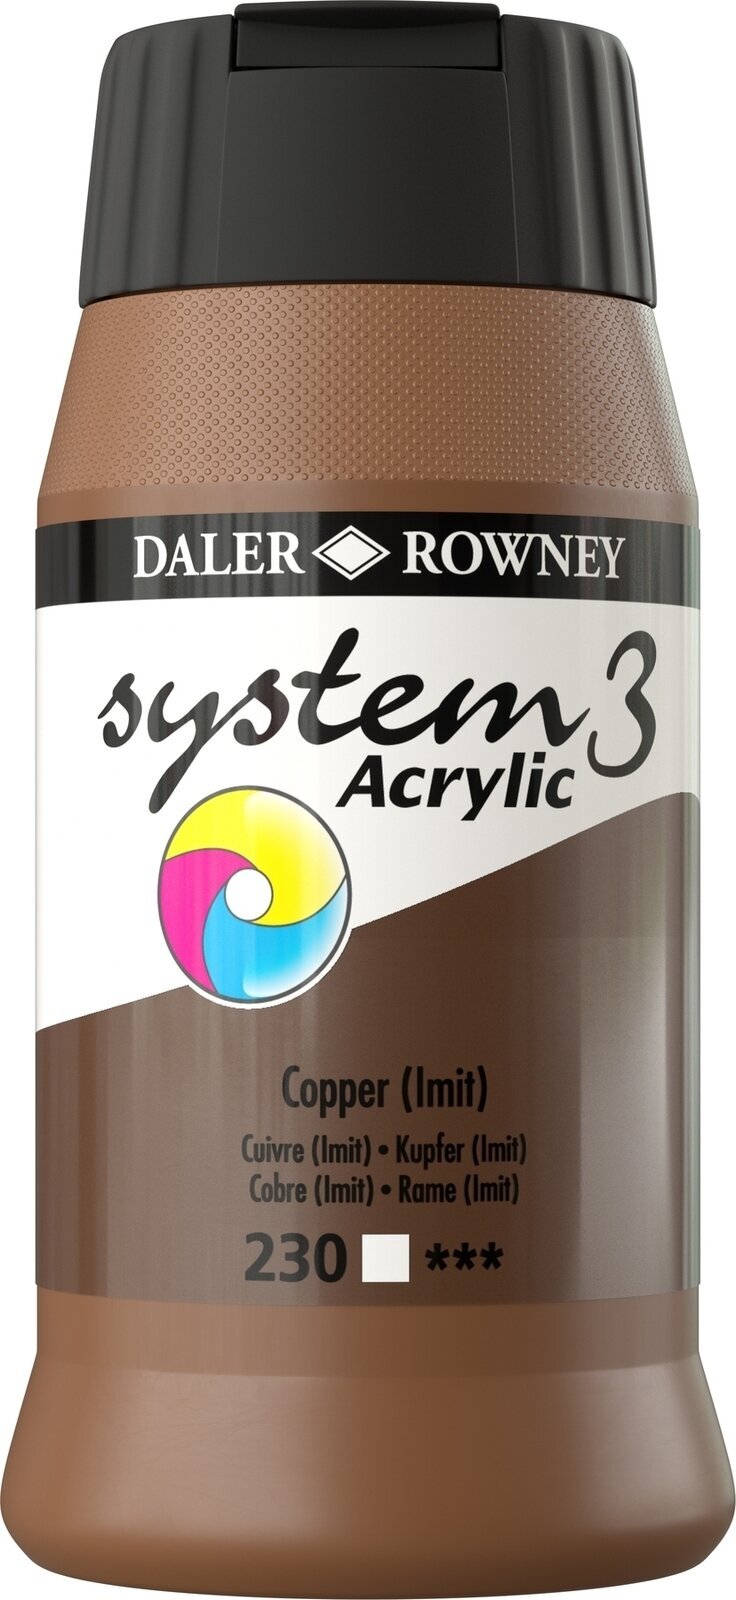 Acrylic Paint Daler Rowney System3 Acrylic Paint Copper Imitation 500 ml 1 pc